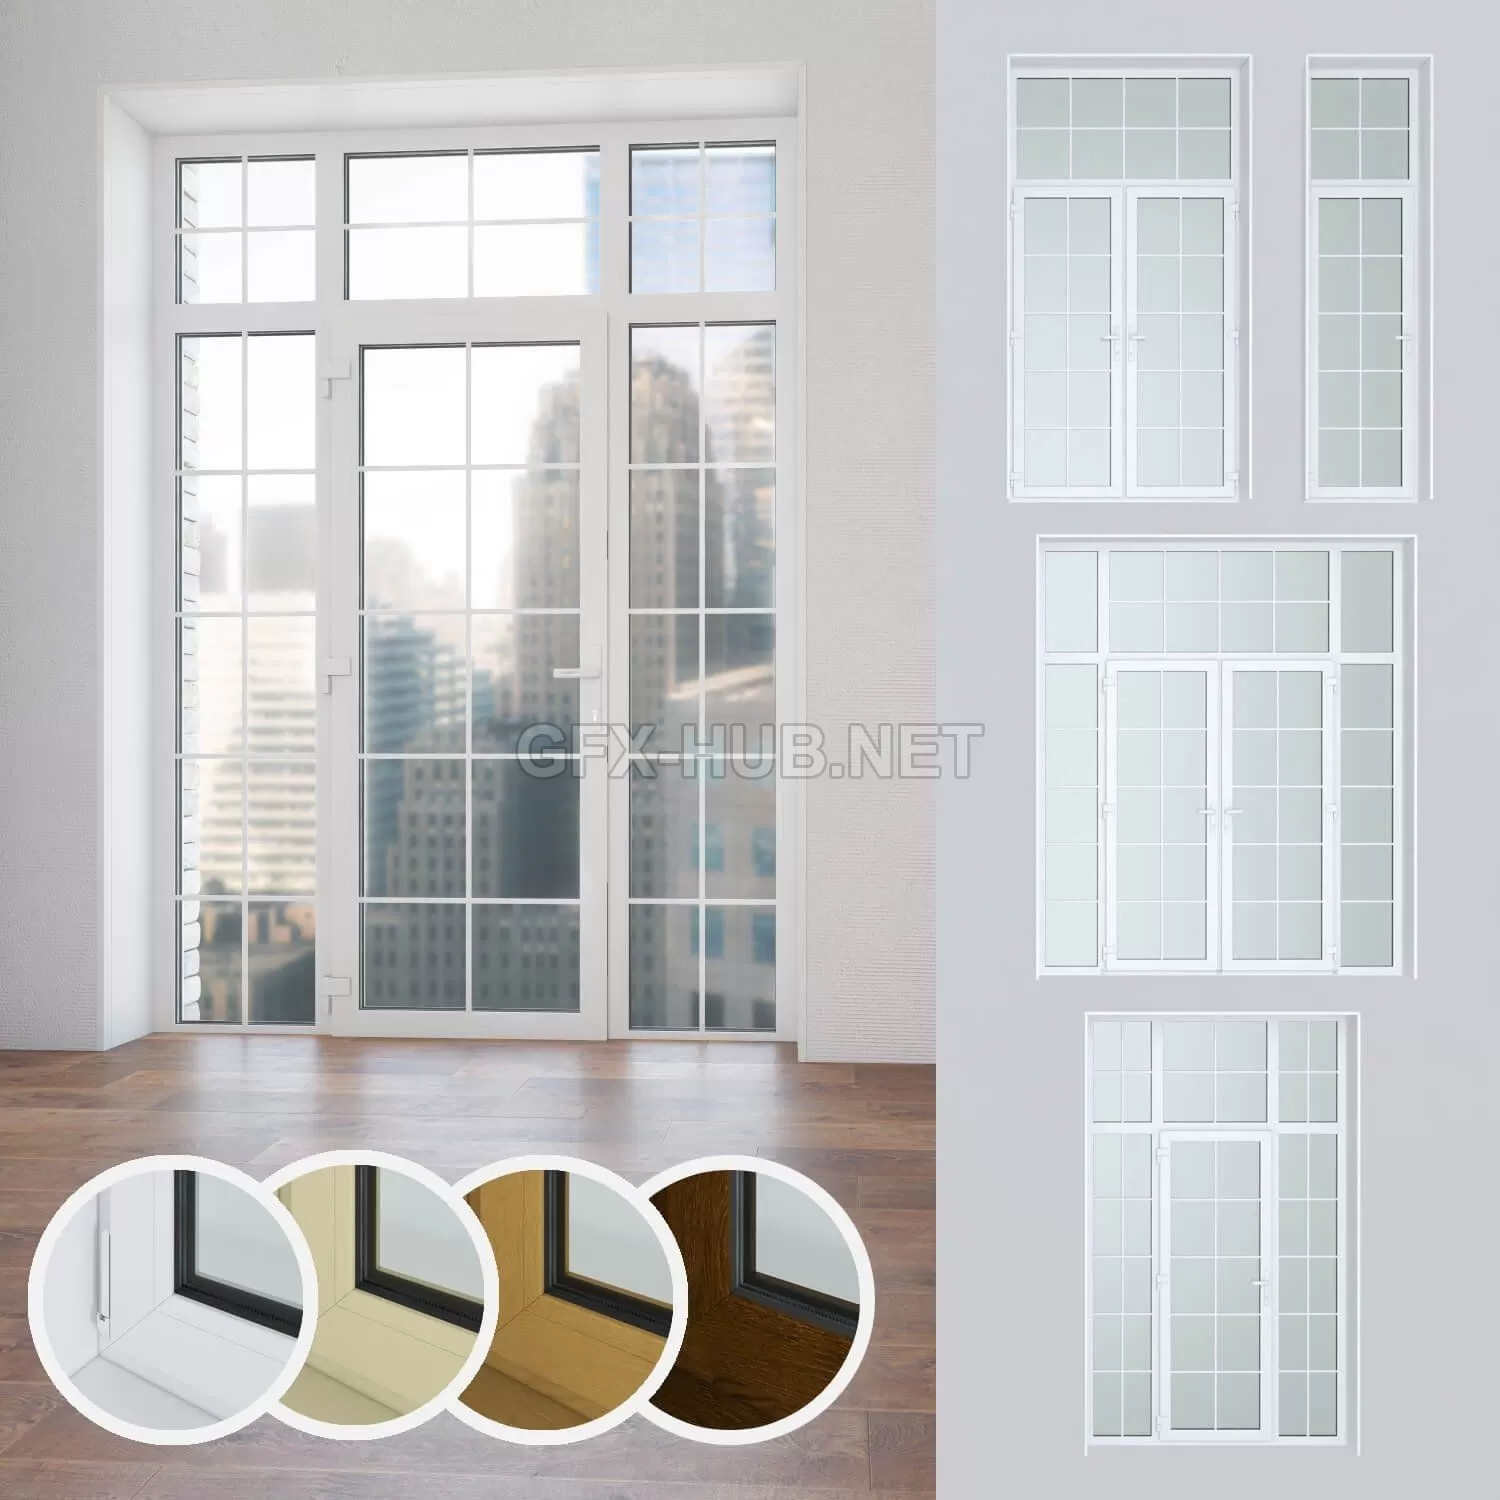 WINDOWS – A set of plastic windows 16